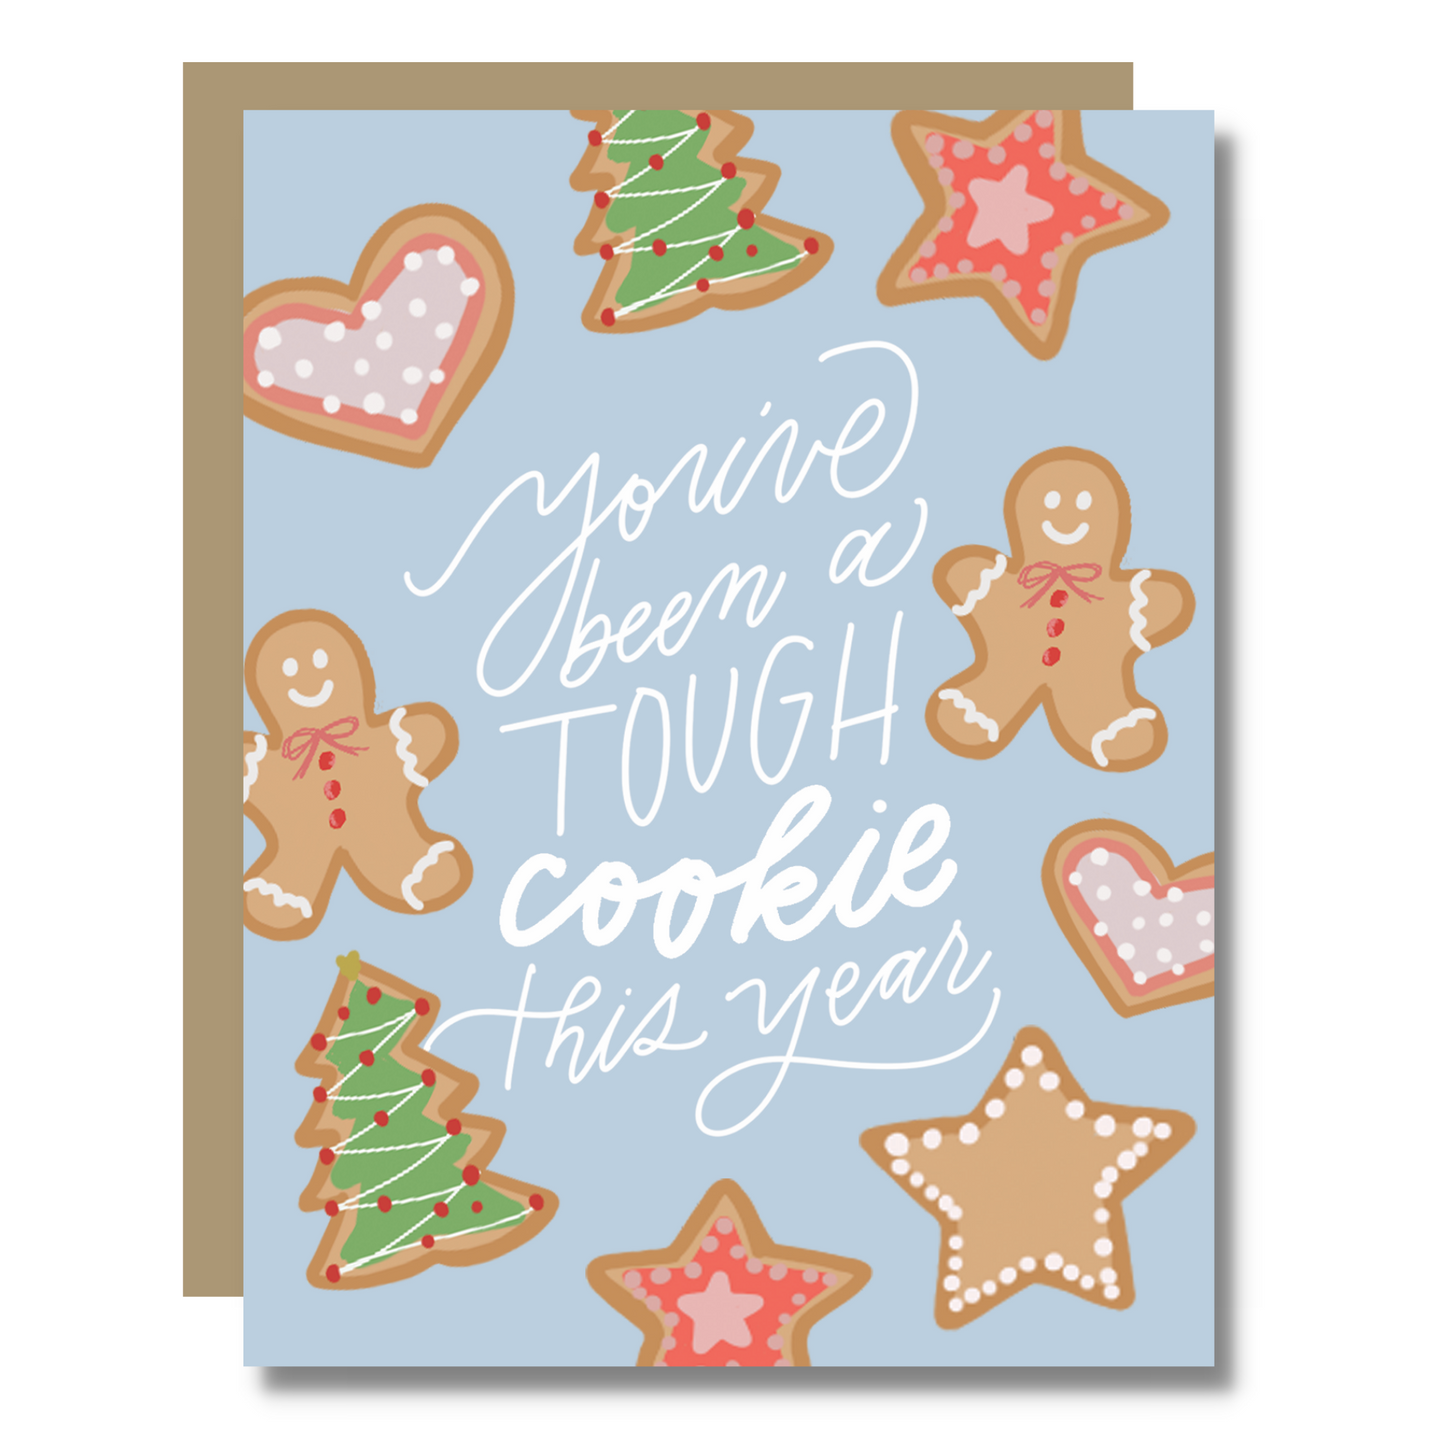 Tough Cookie Card